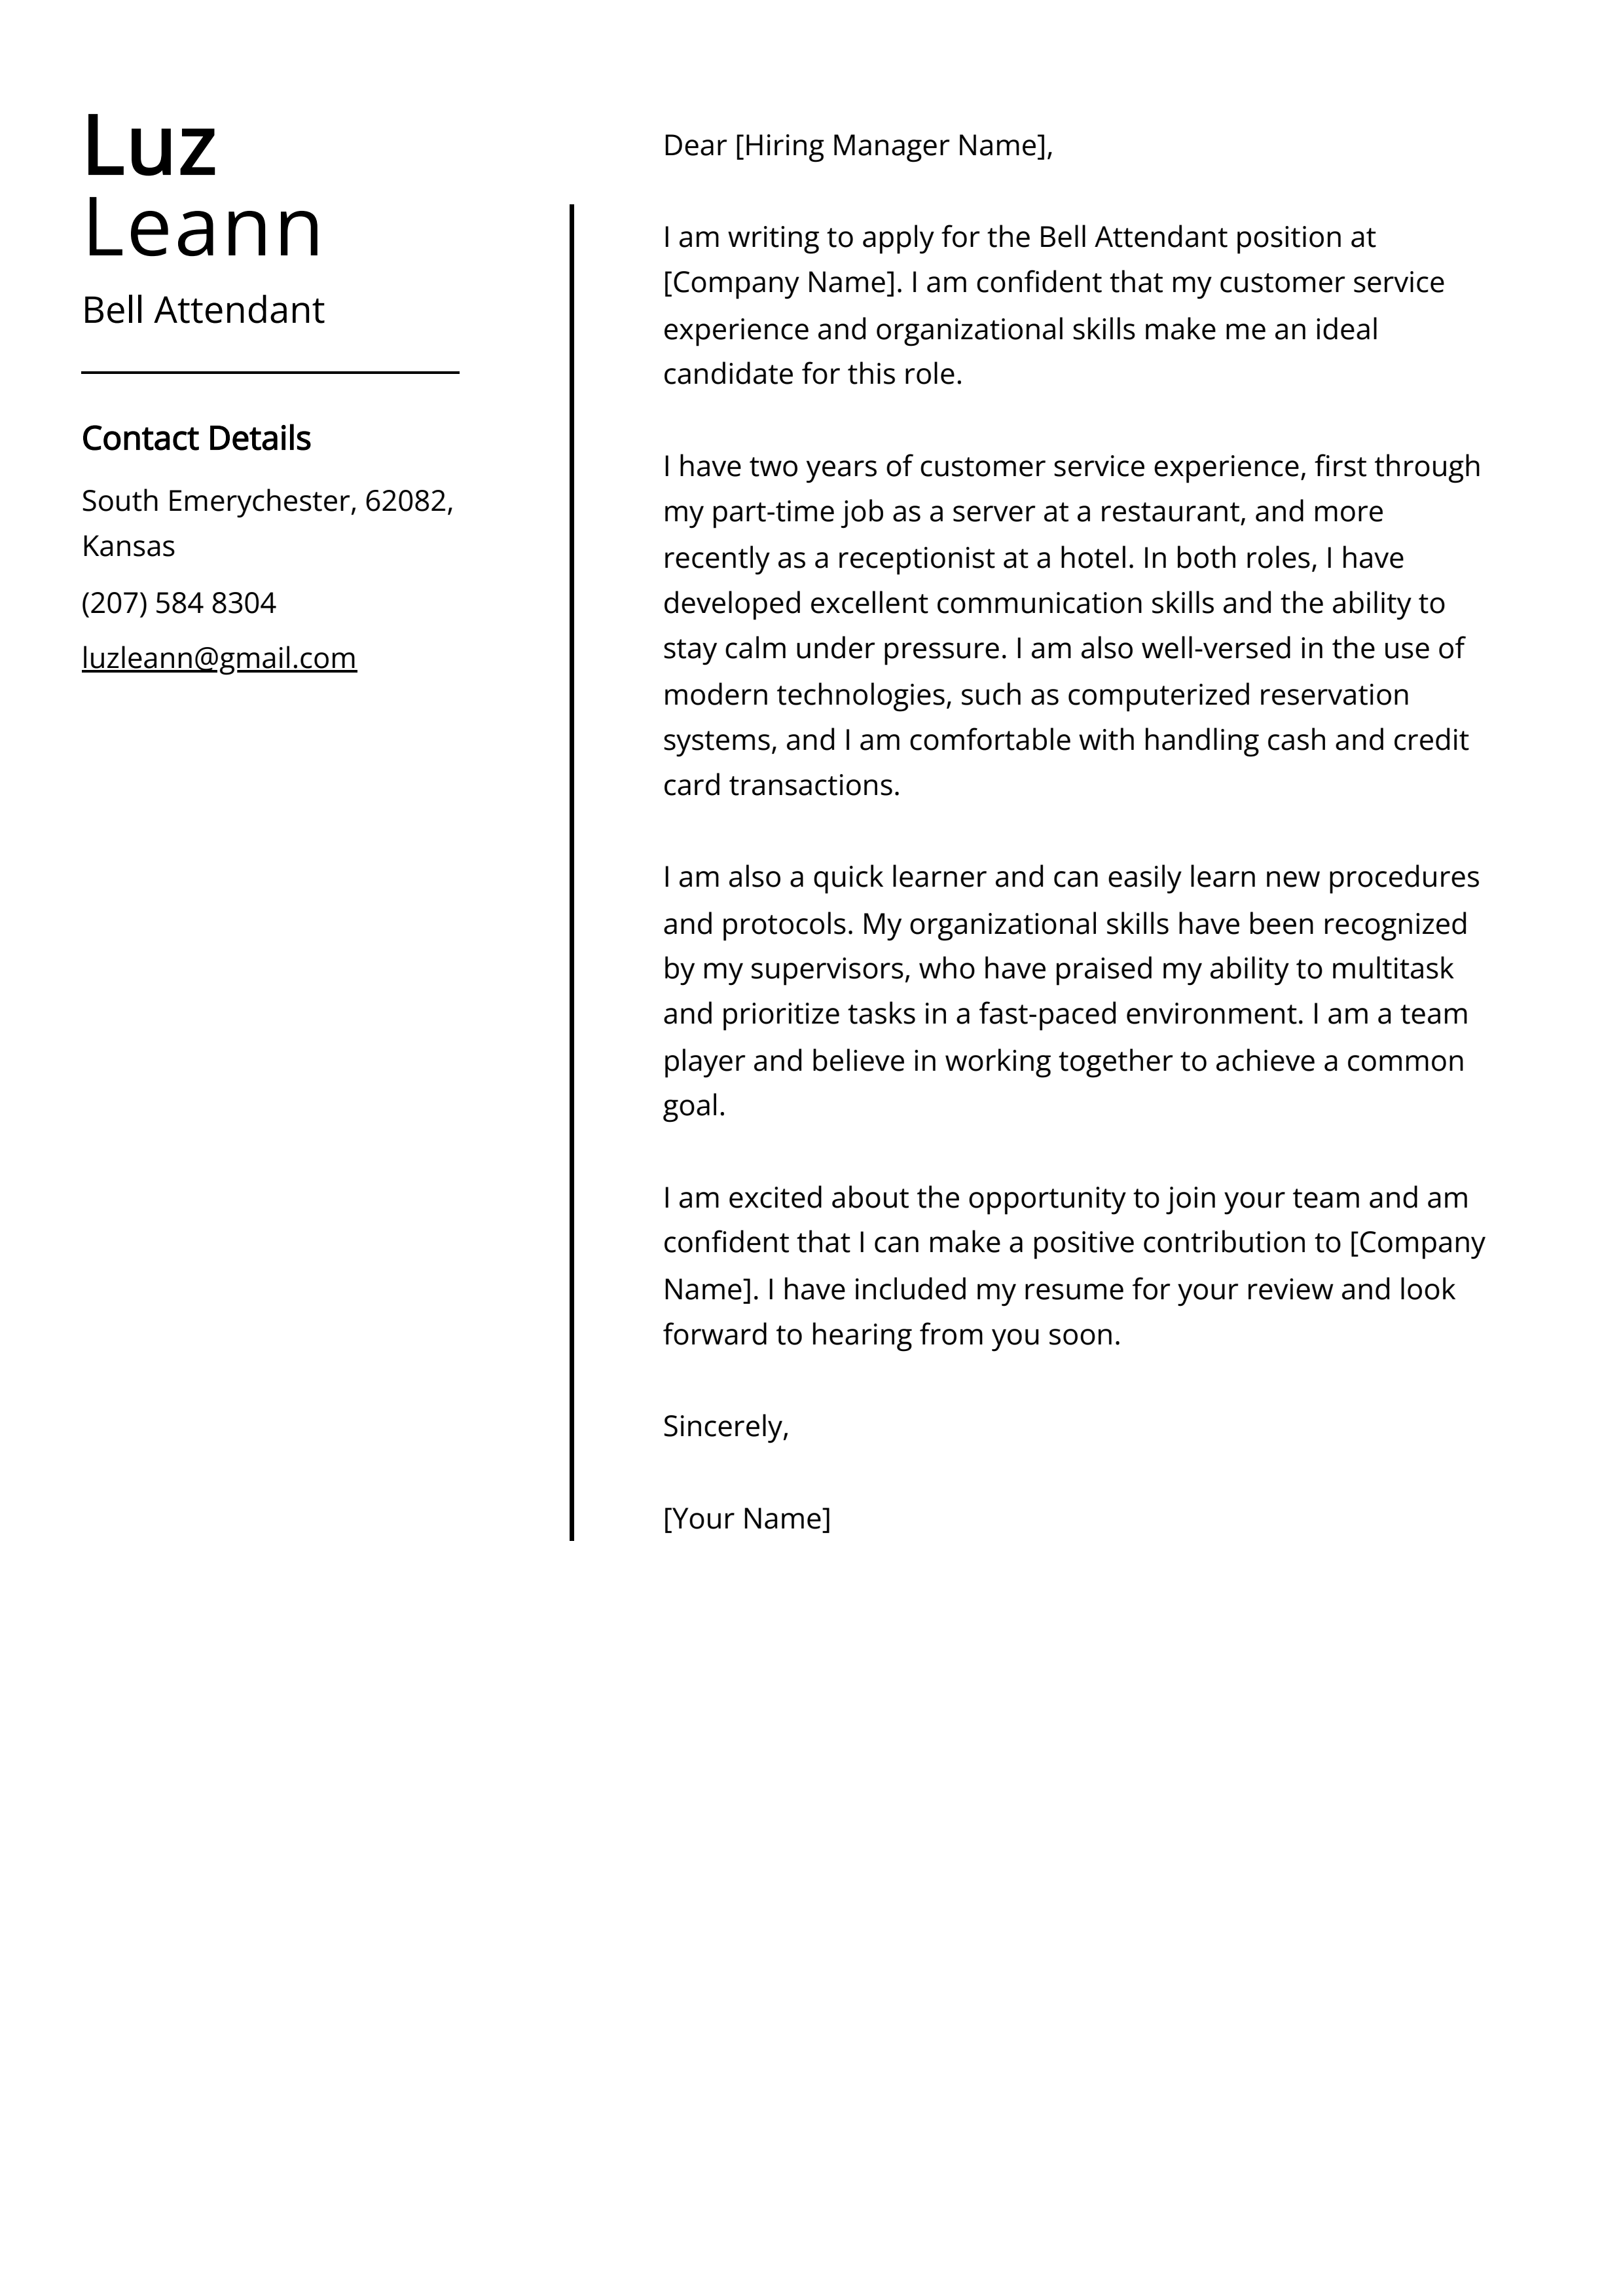 Bell Attendant Cover Letter Example